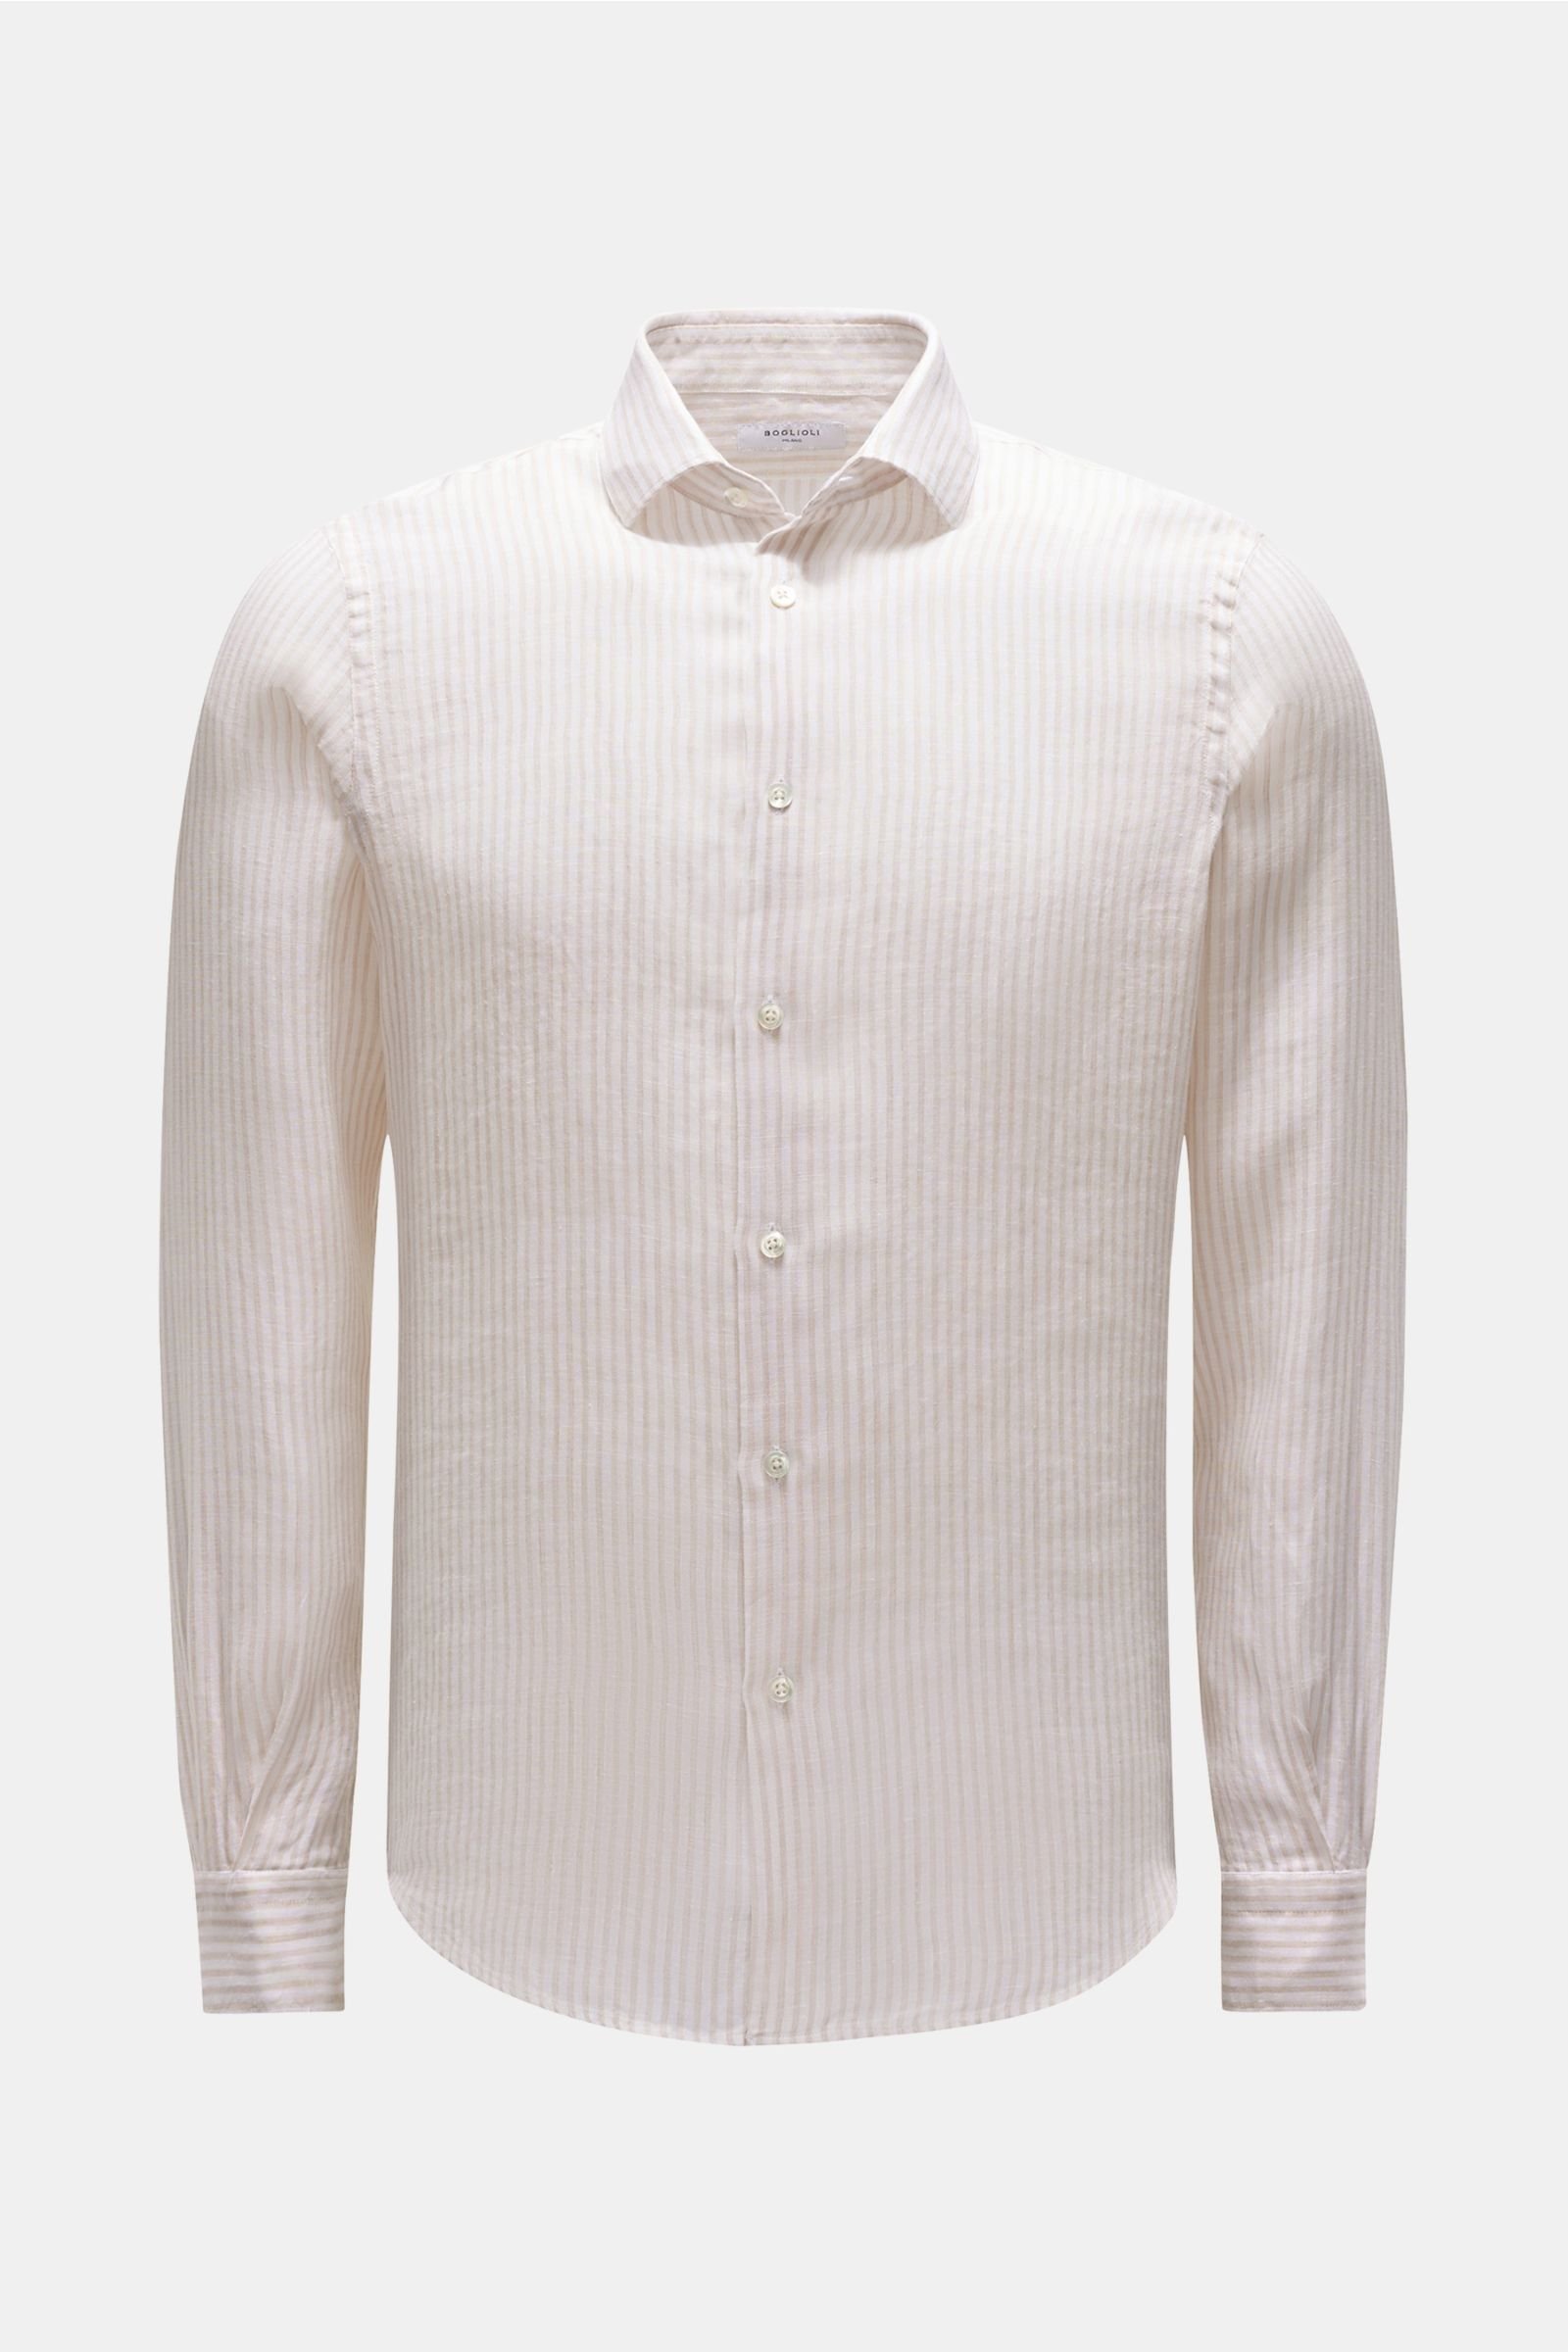 Linen shirt narrow collar beige/white striped